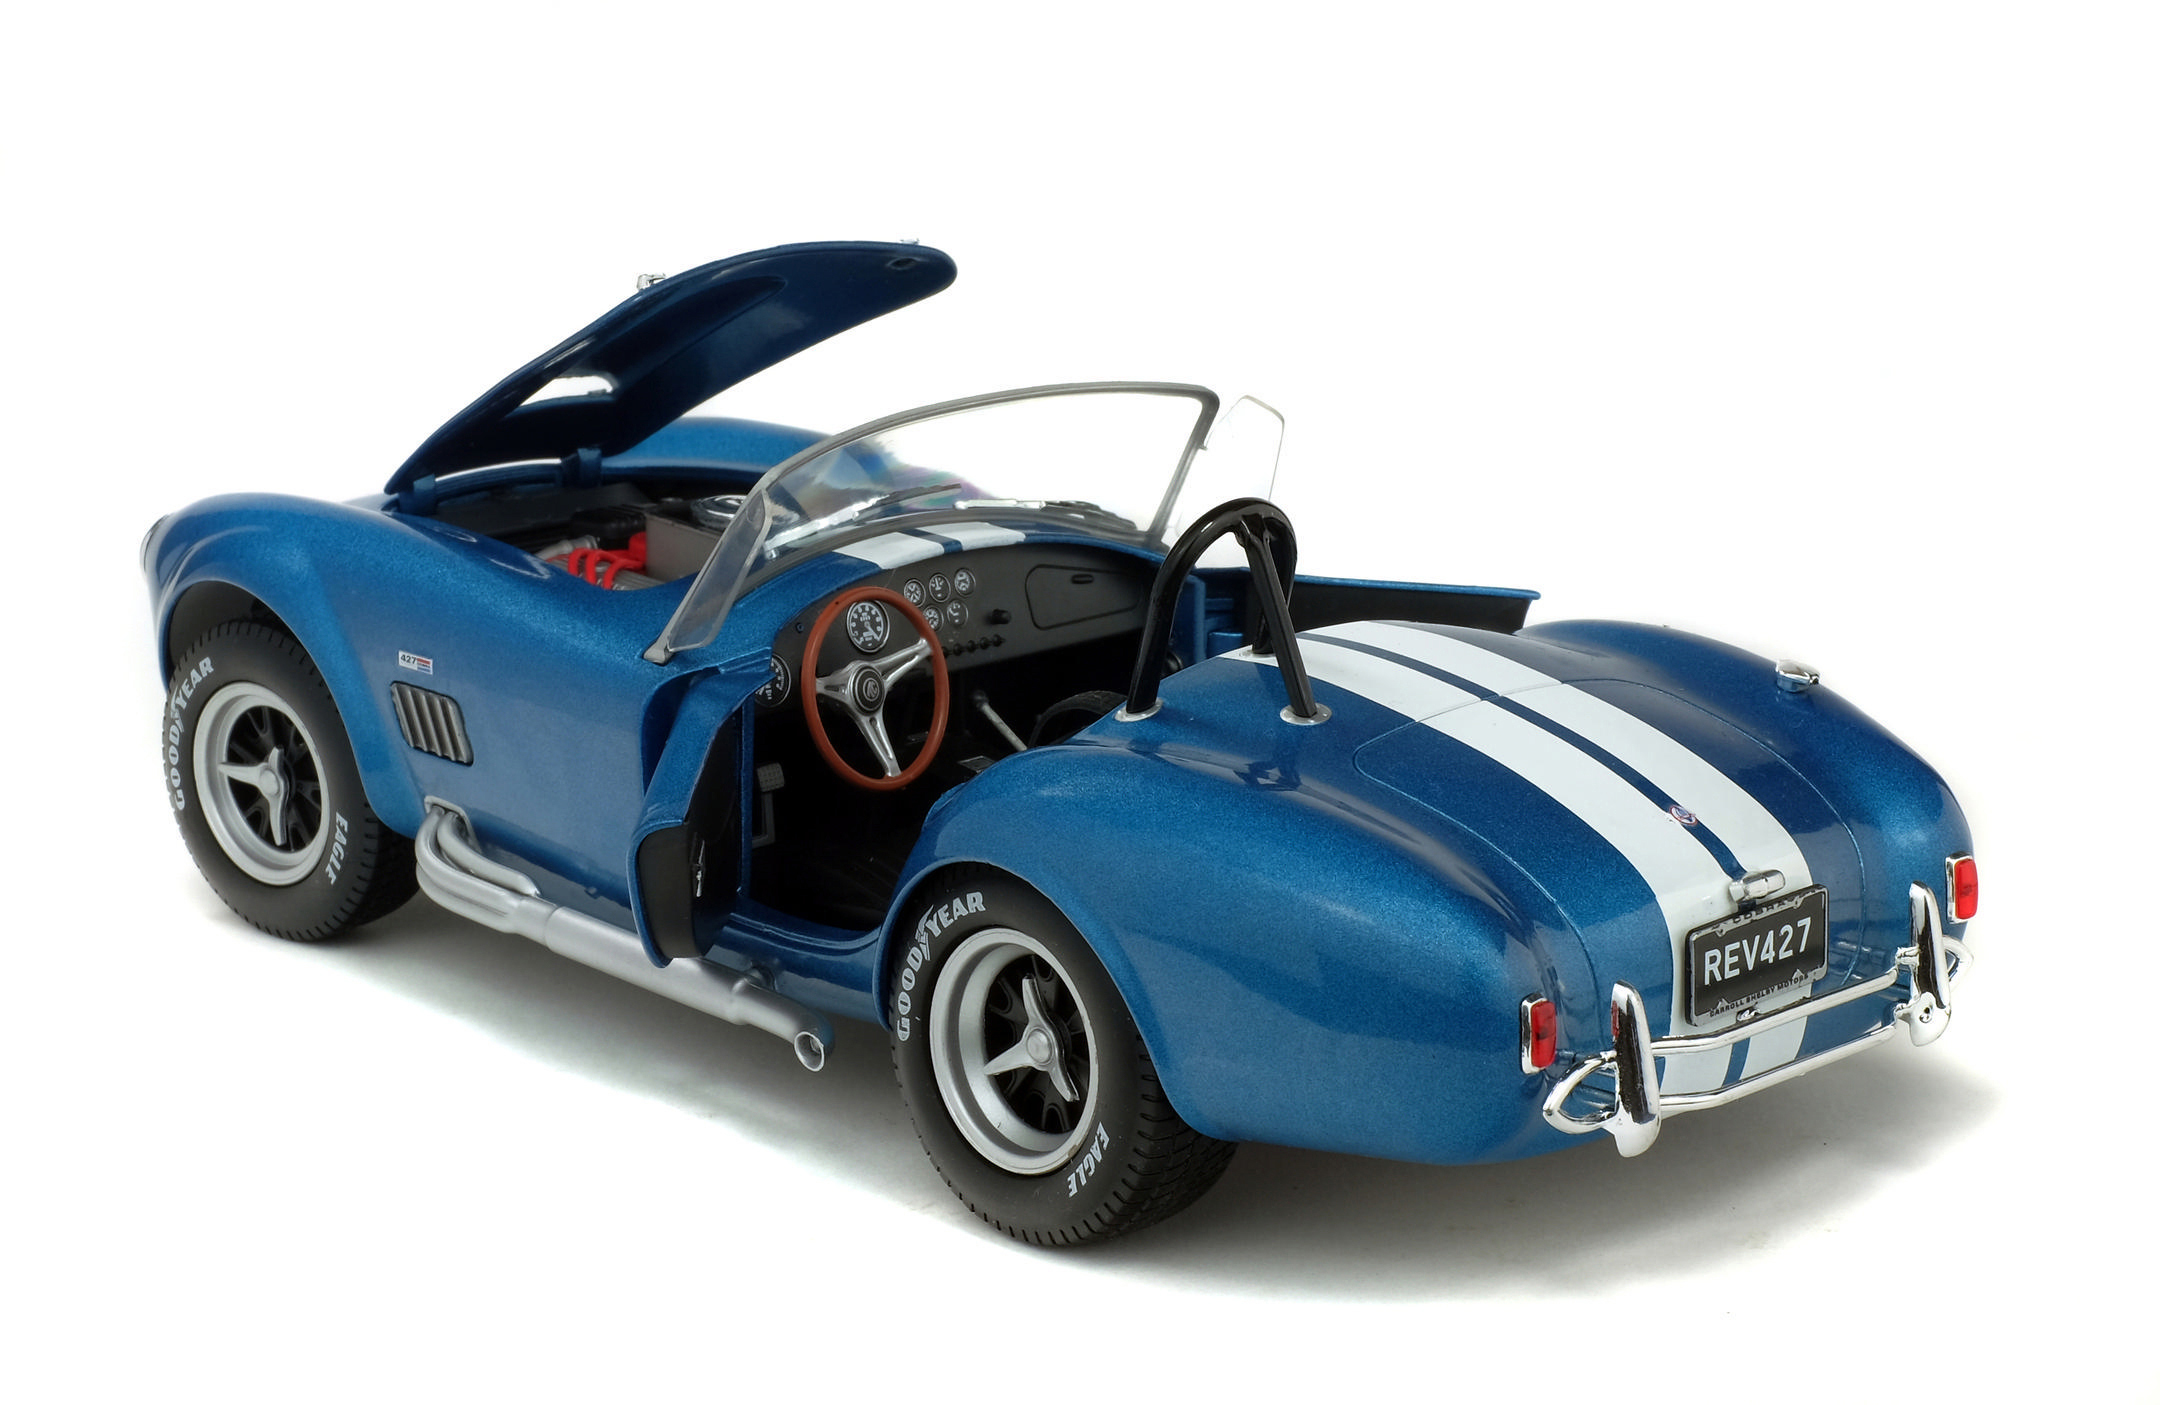 metallic 1965, Baujahr AC blau MKII, Maßstab Spielzeugmodellauto SOLIDO Cobra 1:18, Metallic/Blau Modellauto, 427